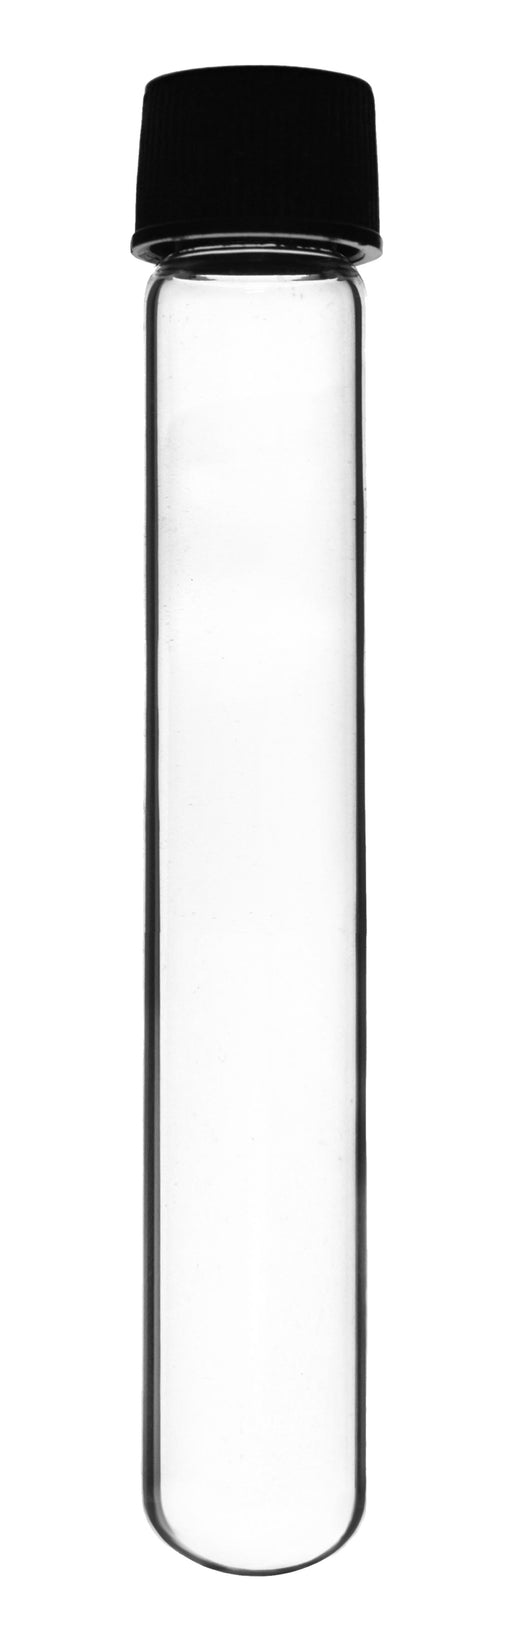 Culture Tube with Screw Cap, 50mL, 12/PK - 25x150mm - Round Bottom - Borosilicate Glass